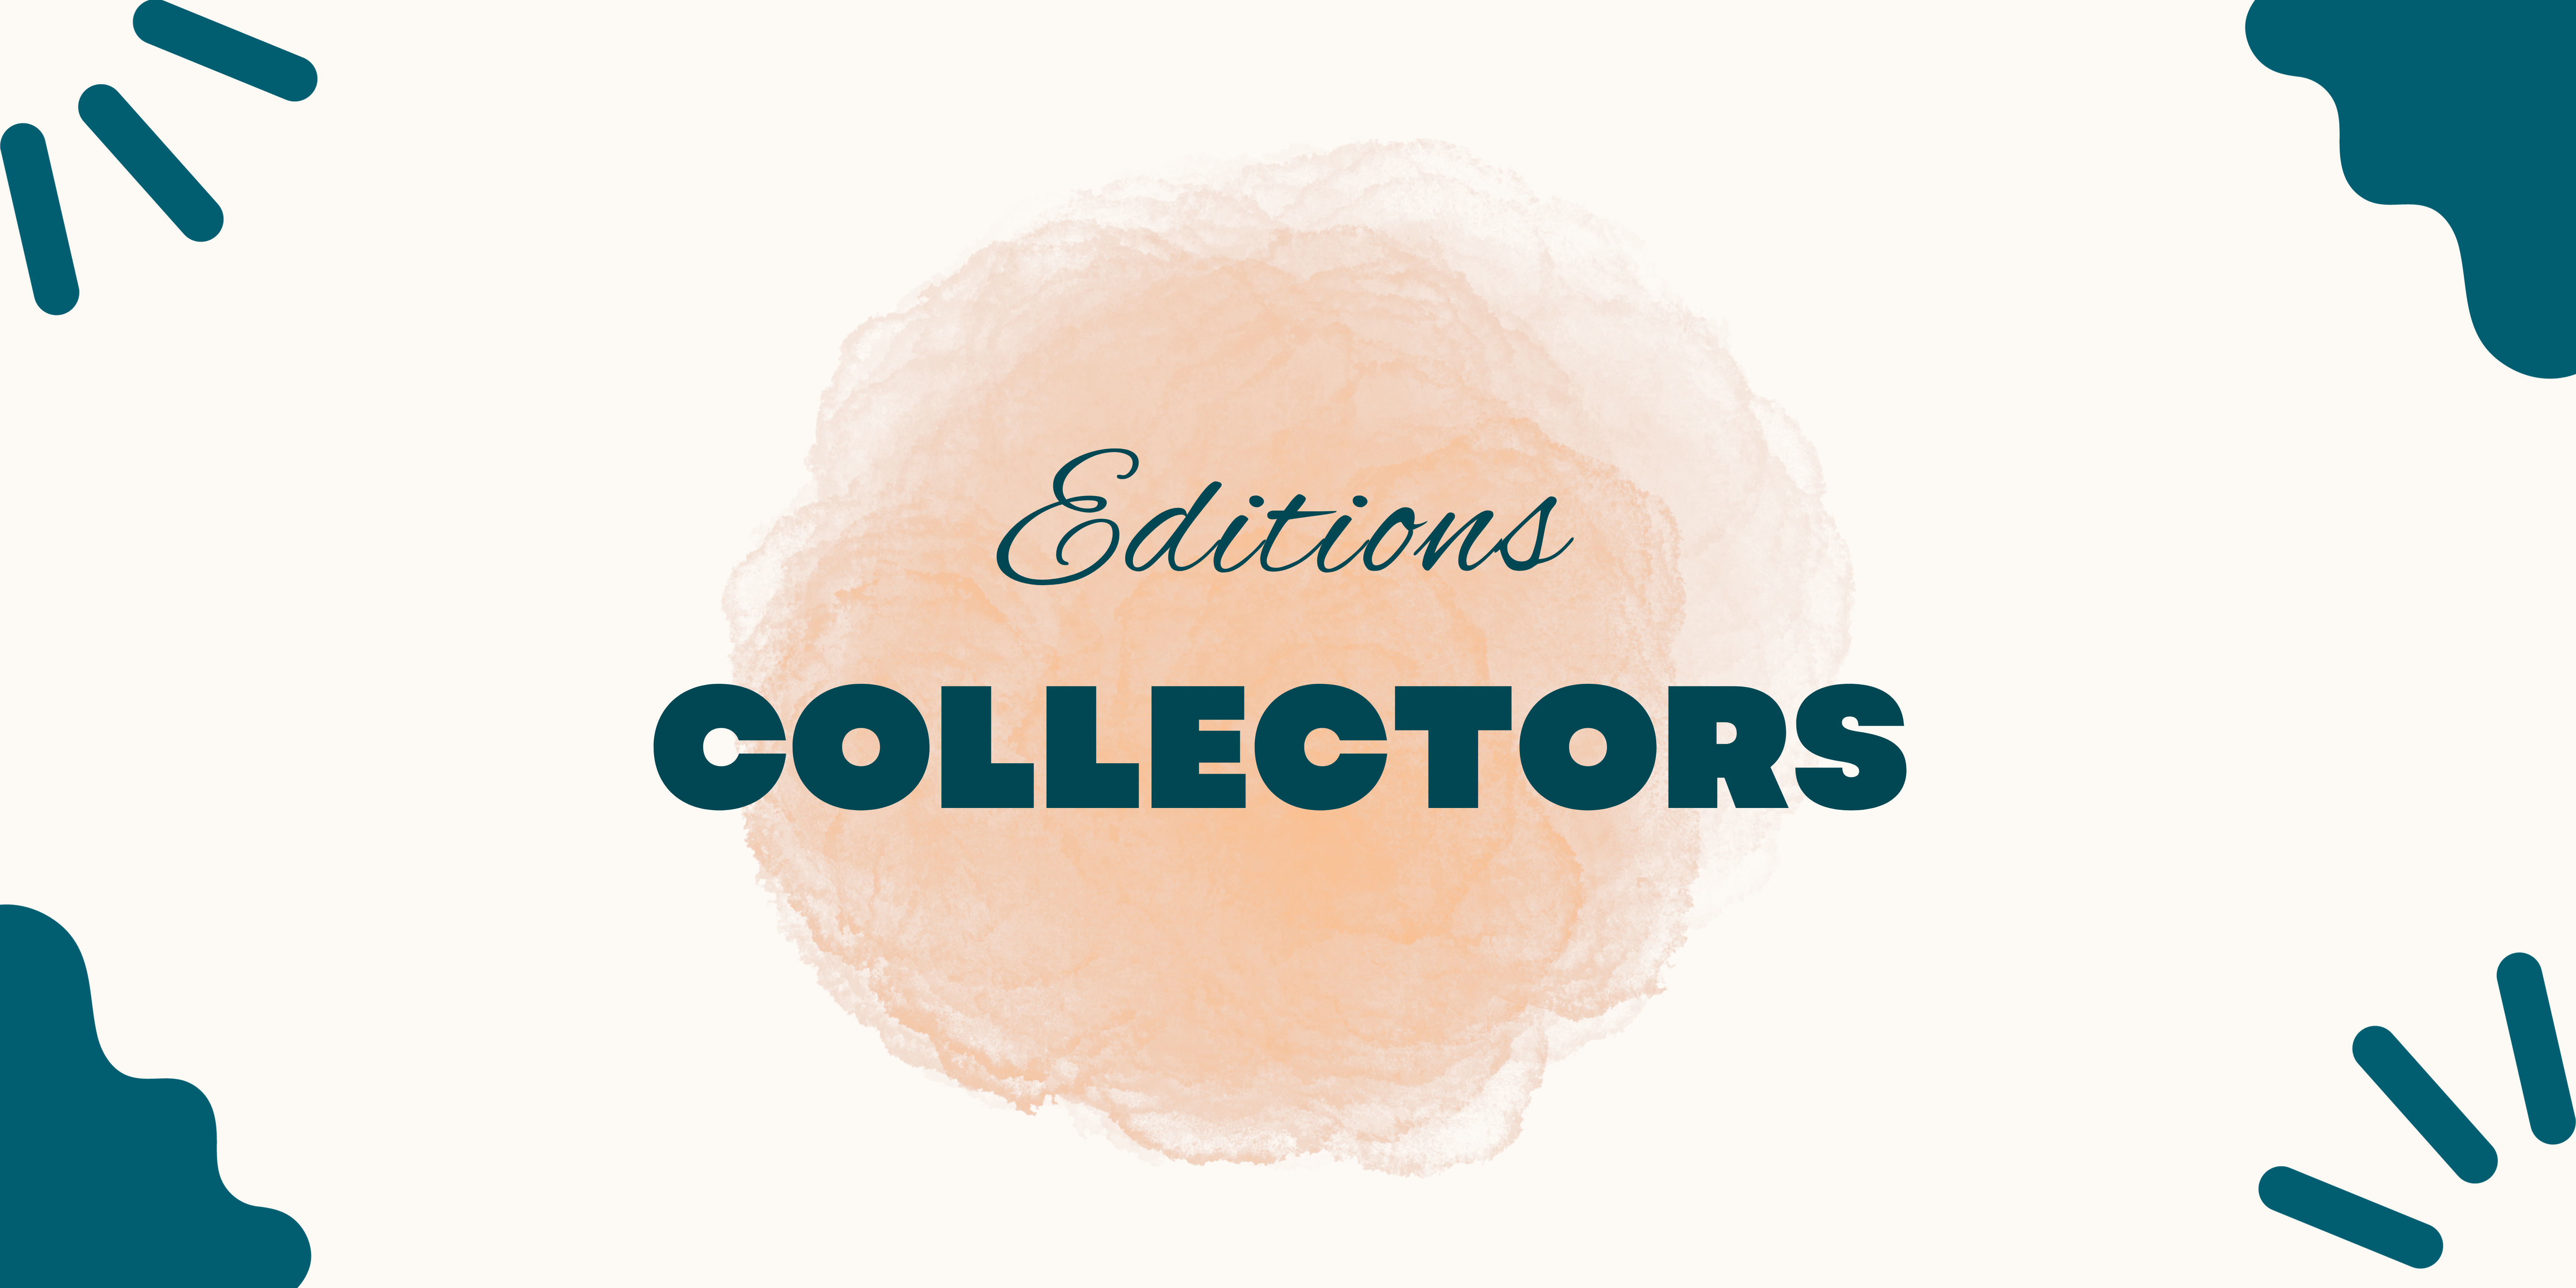 Editions collectors